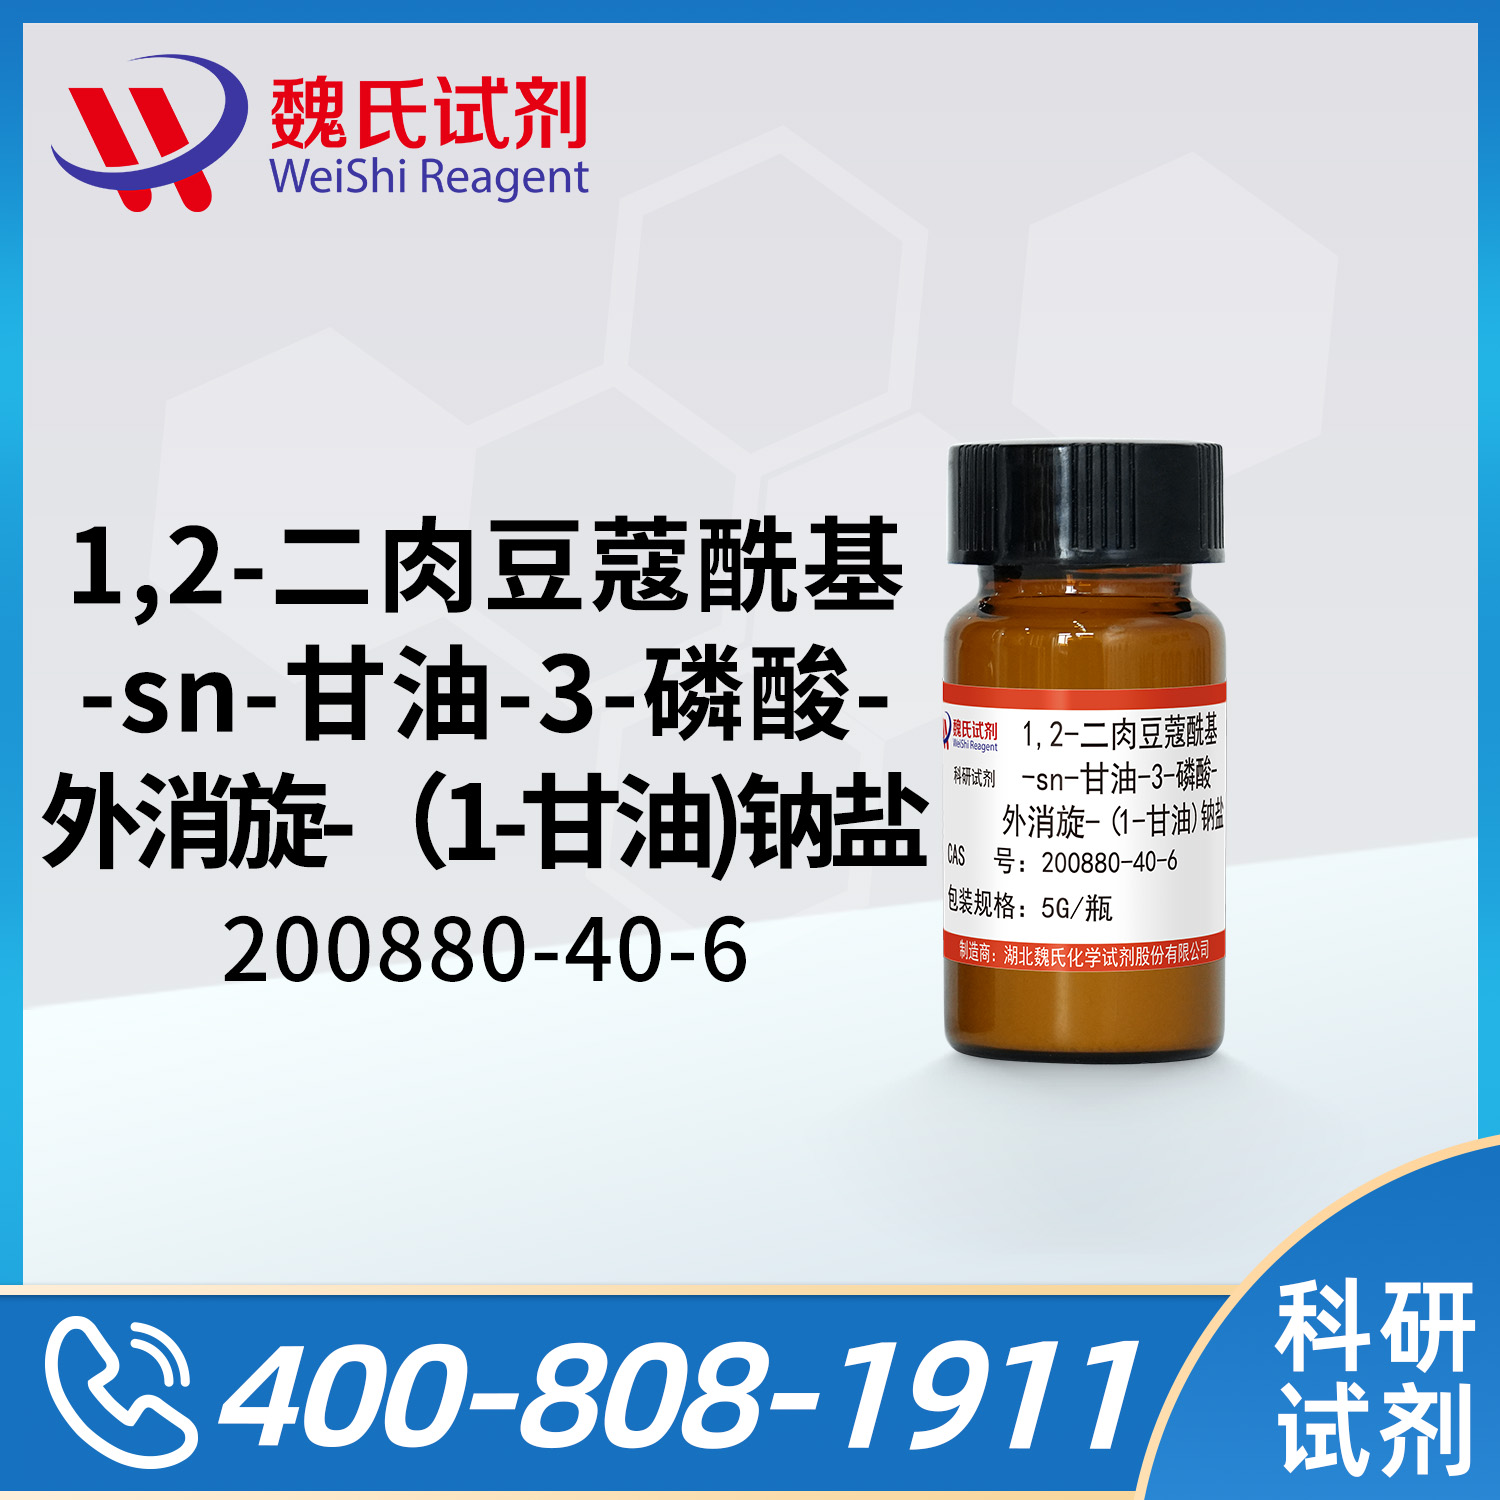 1,2-DiMyristoyl-sn-glycero-3-phospho-rac-(1-glycerol) SodiuM Salt